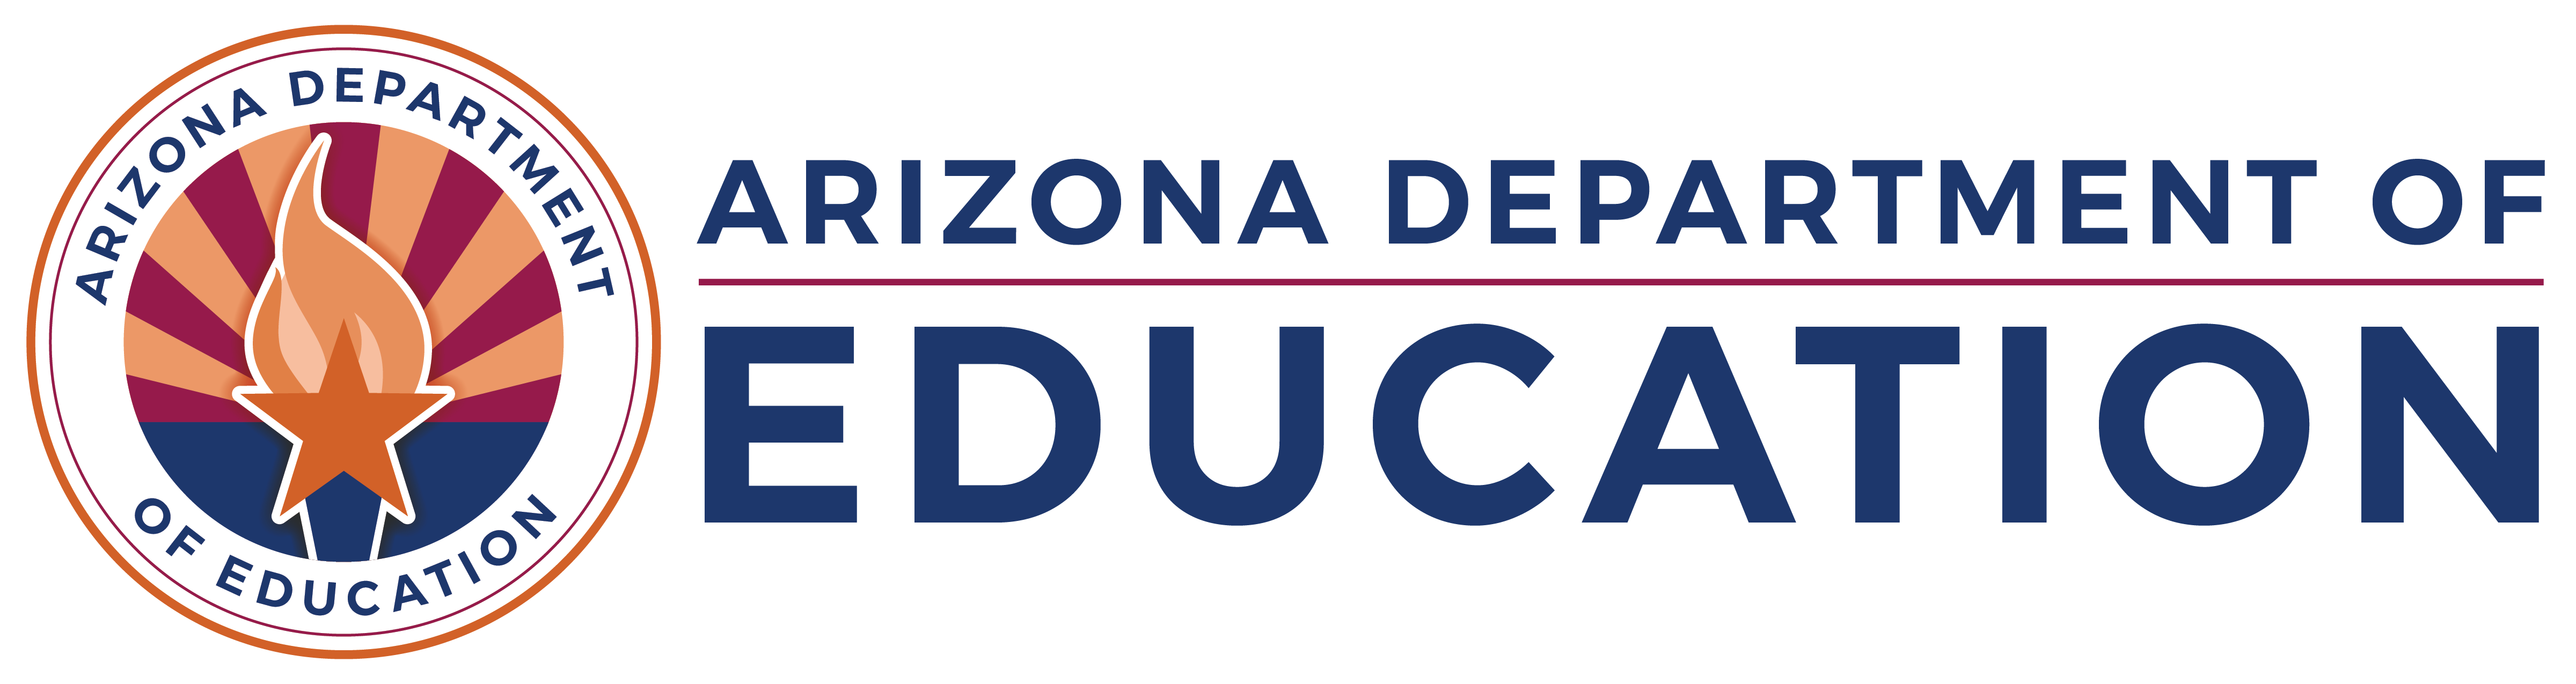 Arizona Department of Education Homepage